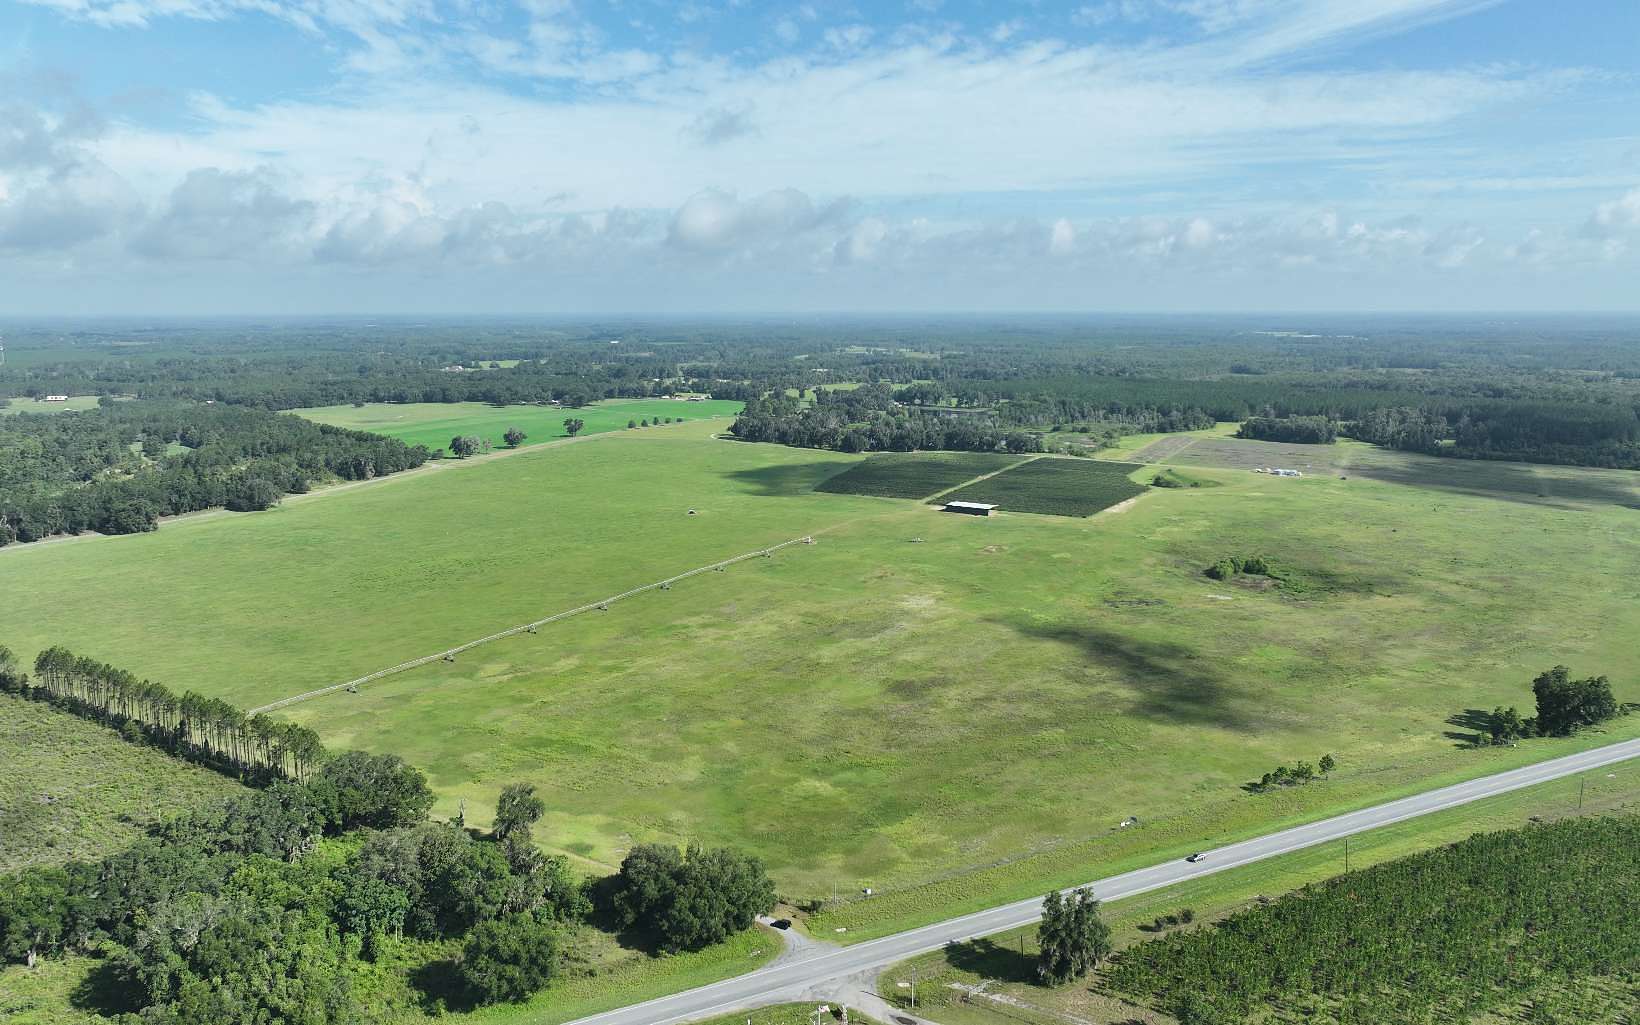 390 Acres of Agricultural Land for Sale in Live Oak, Florida